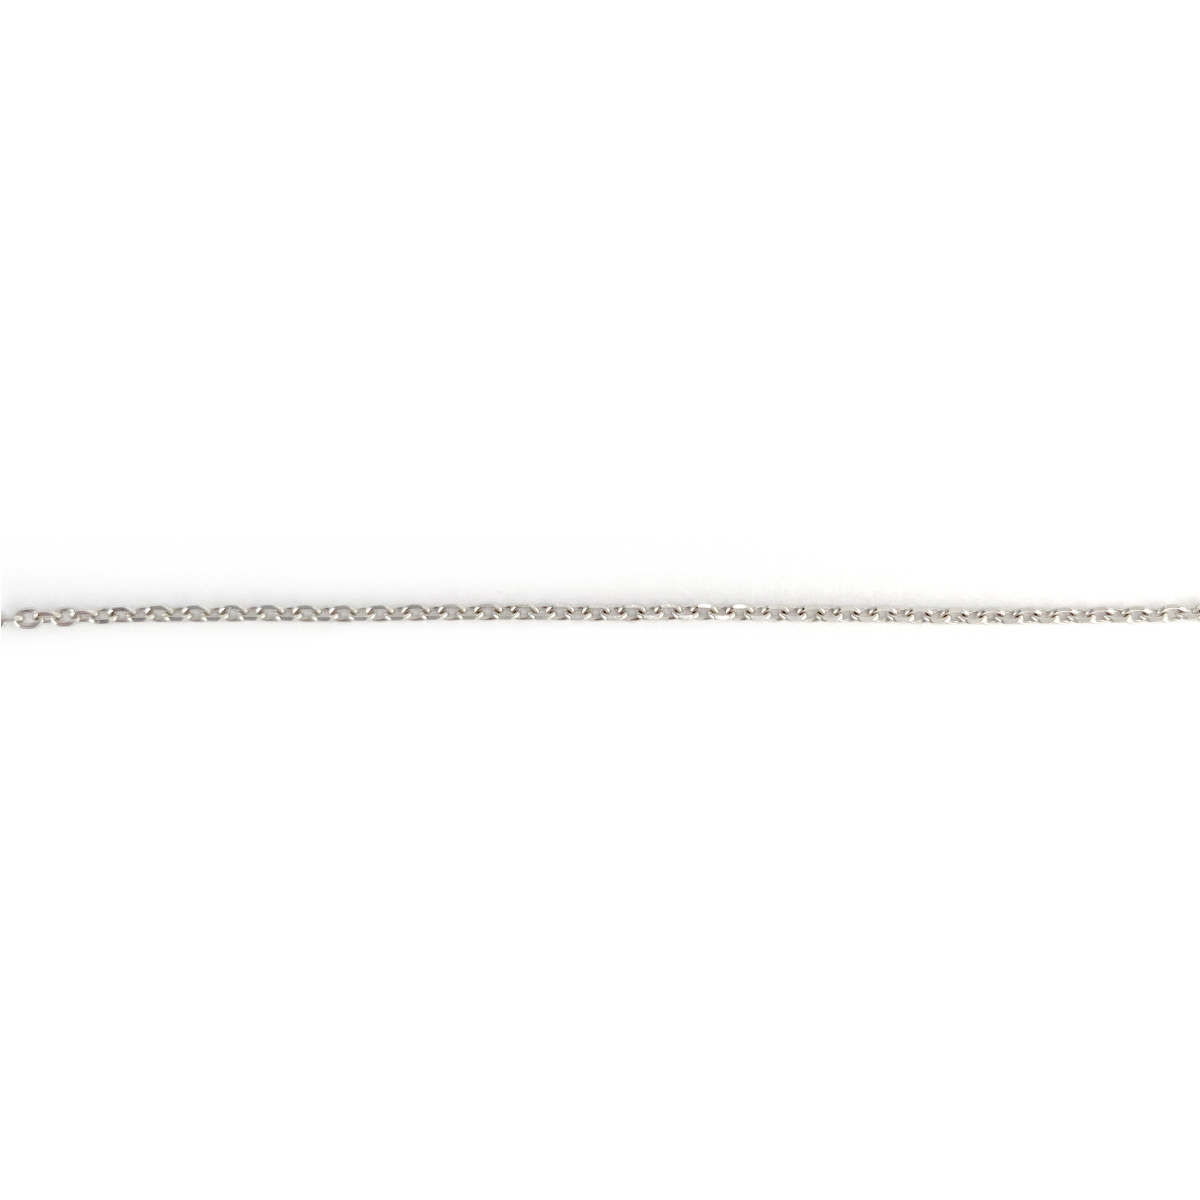 Collier d'occasion or 750 blanc 40 cm diamant aigue-marine - vue 3